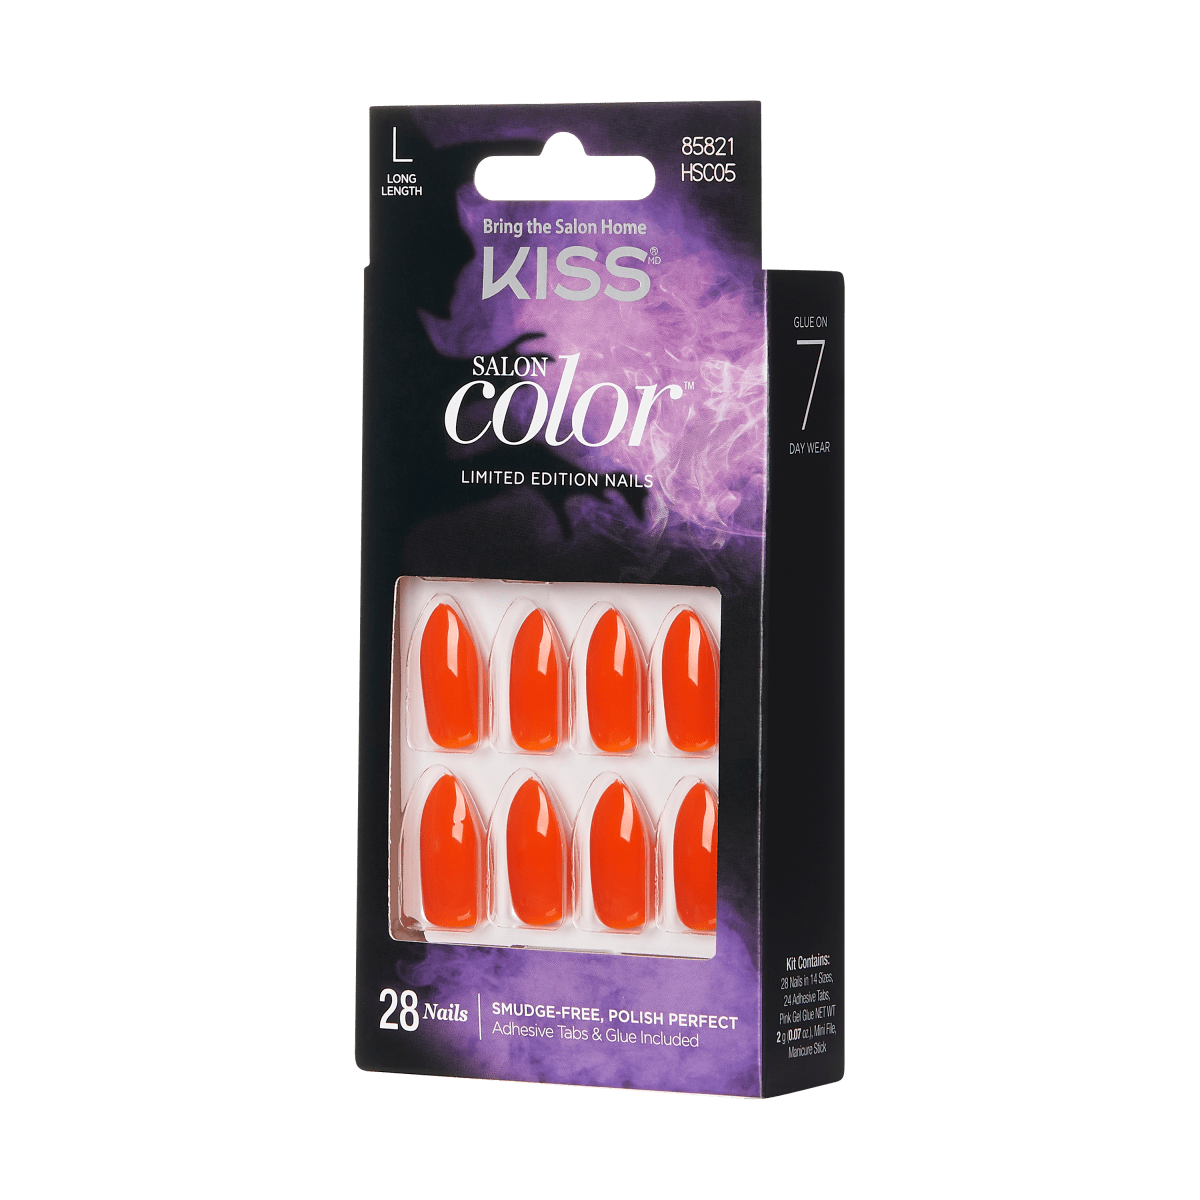 KISS Halloween Salon Color Nails - Long Gone